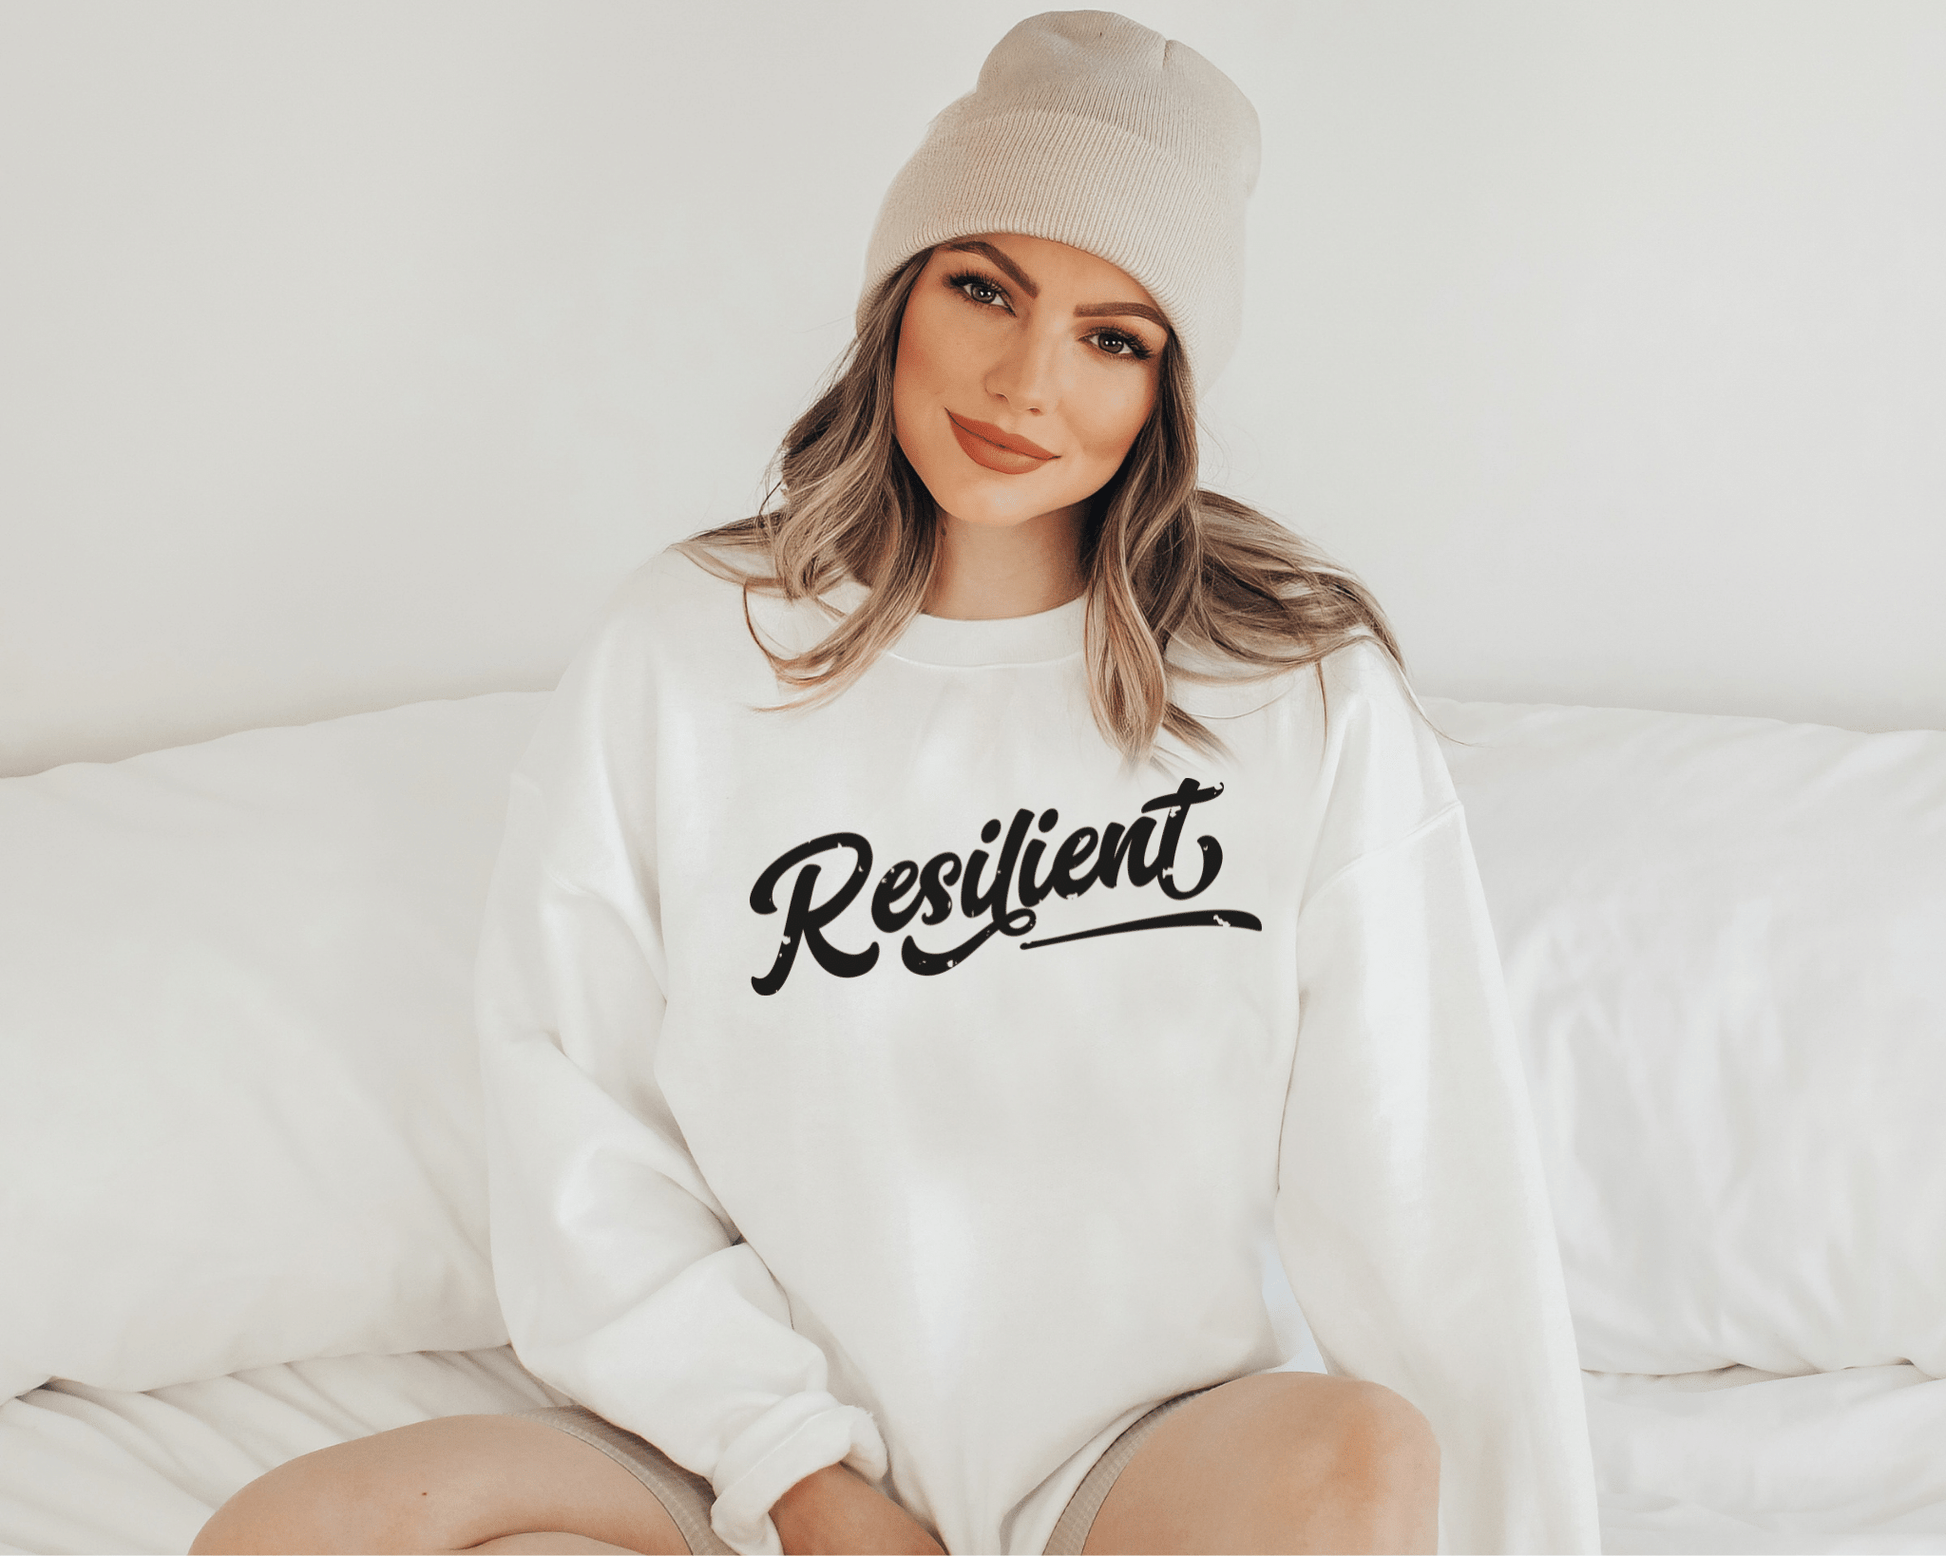 Resilient Sweatshirt in White